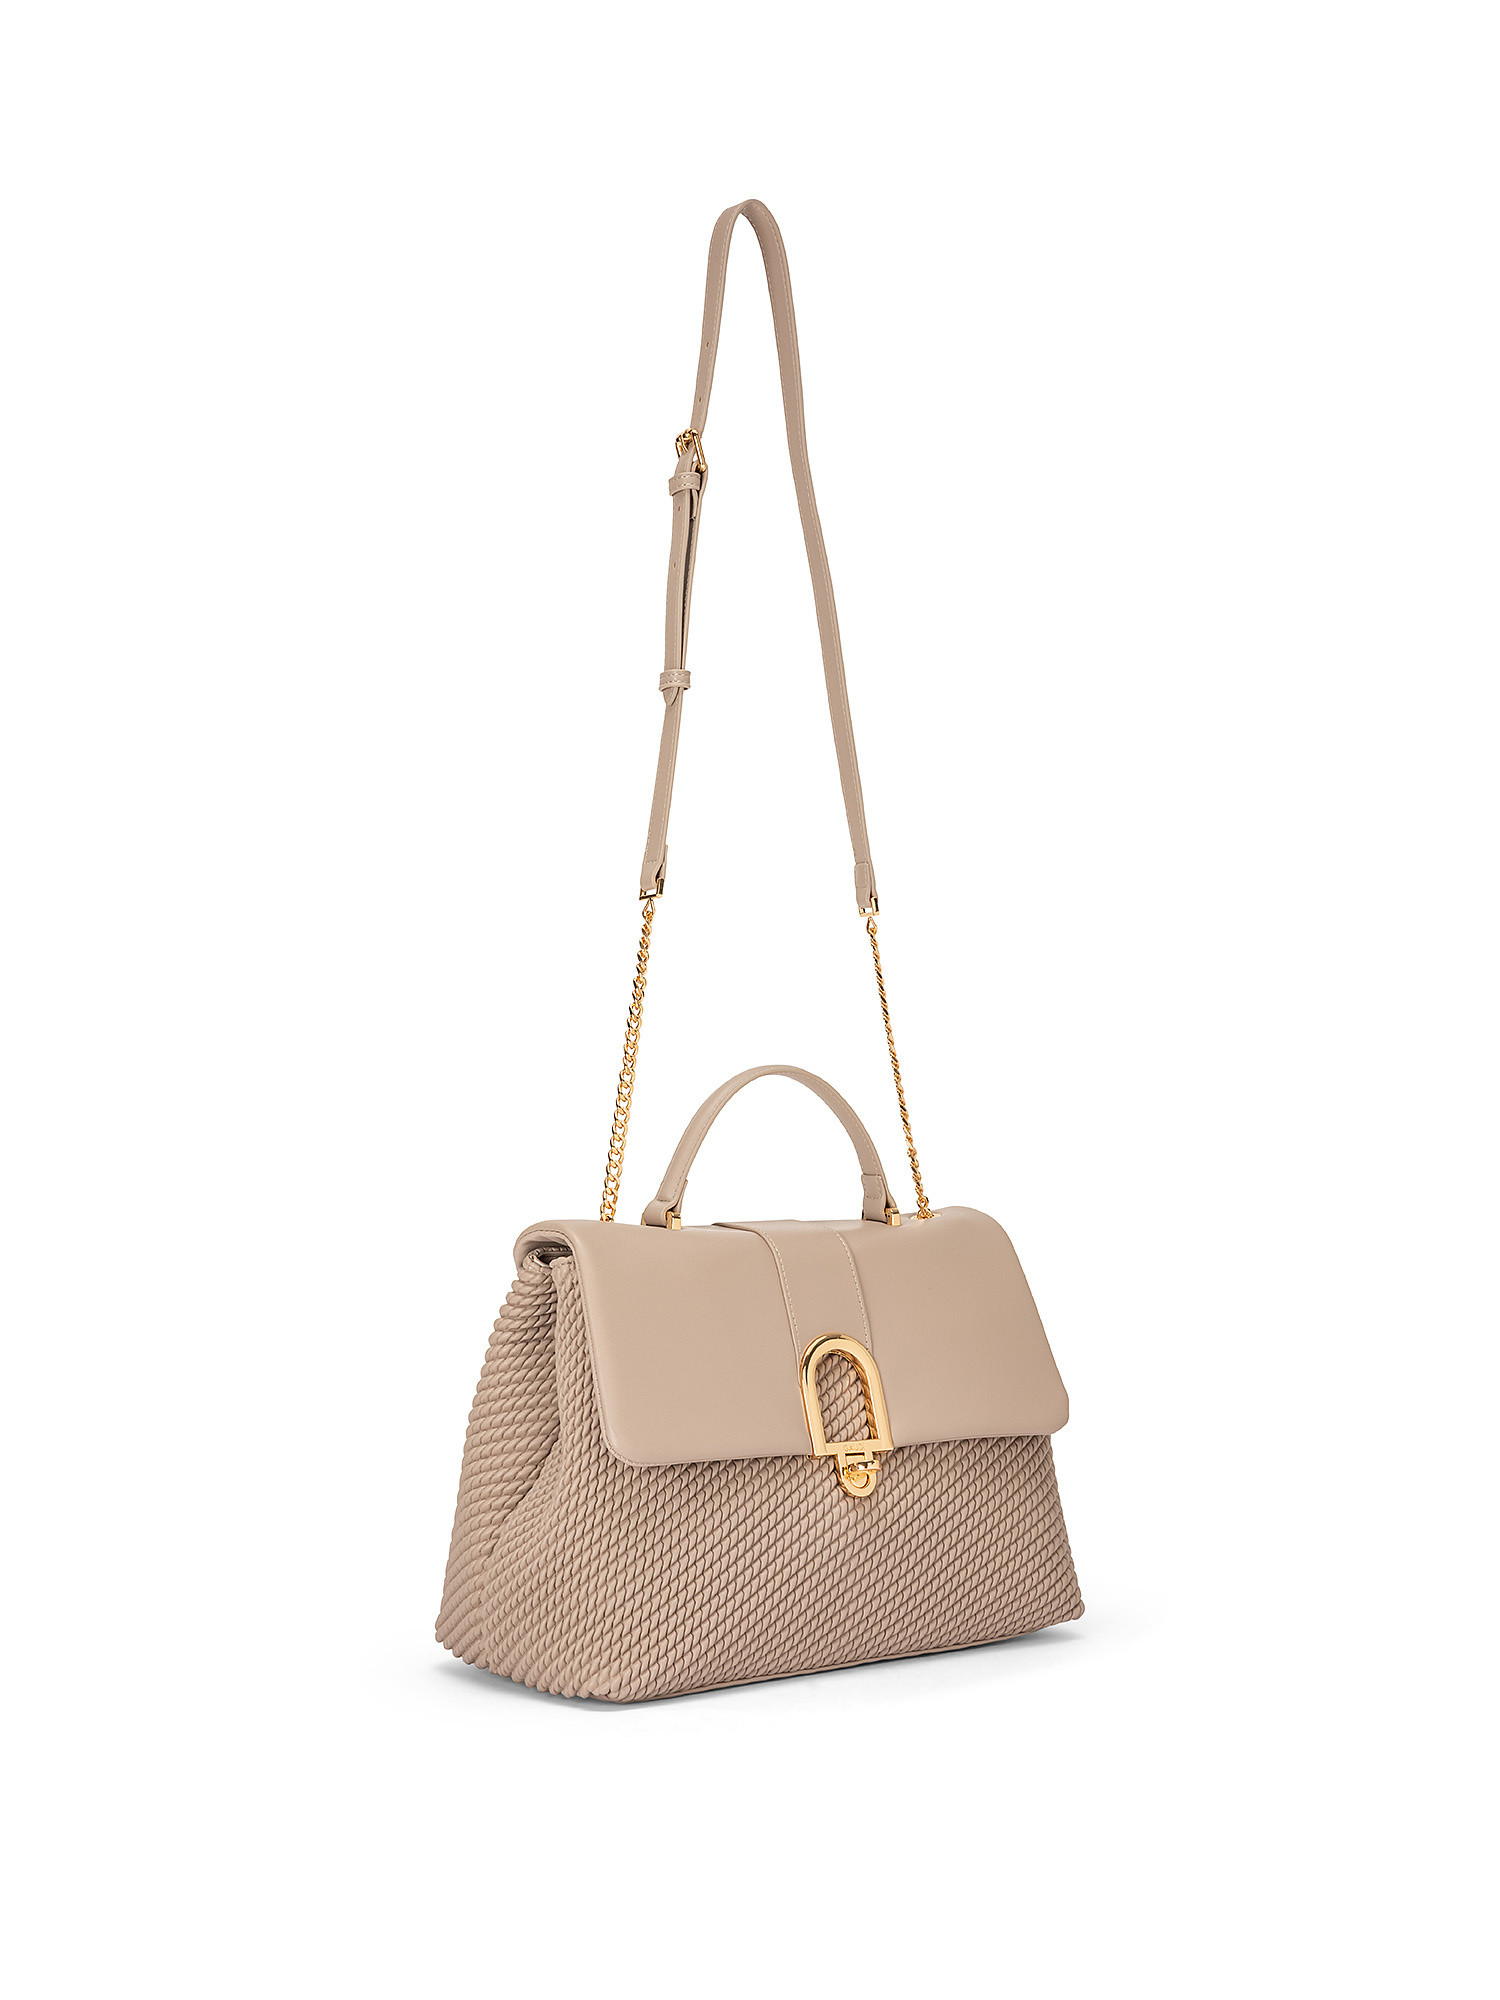 Thalissa satchel bag, Dove Grey, large image number 1